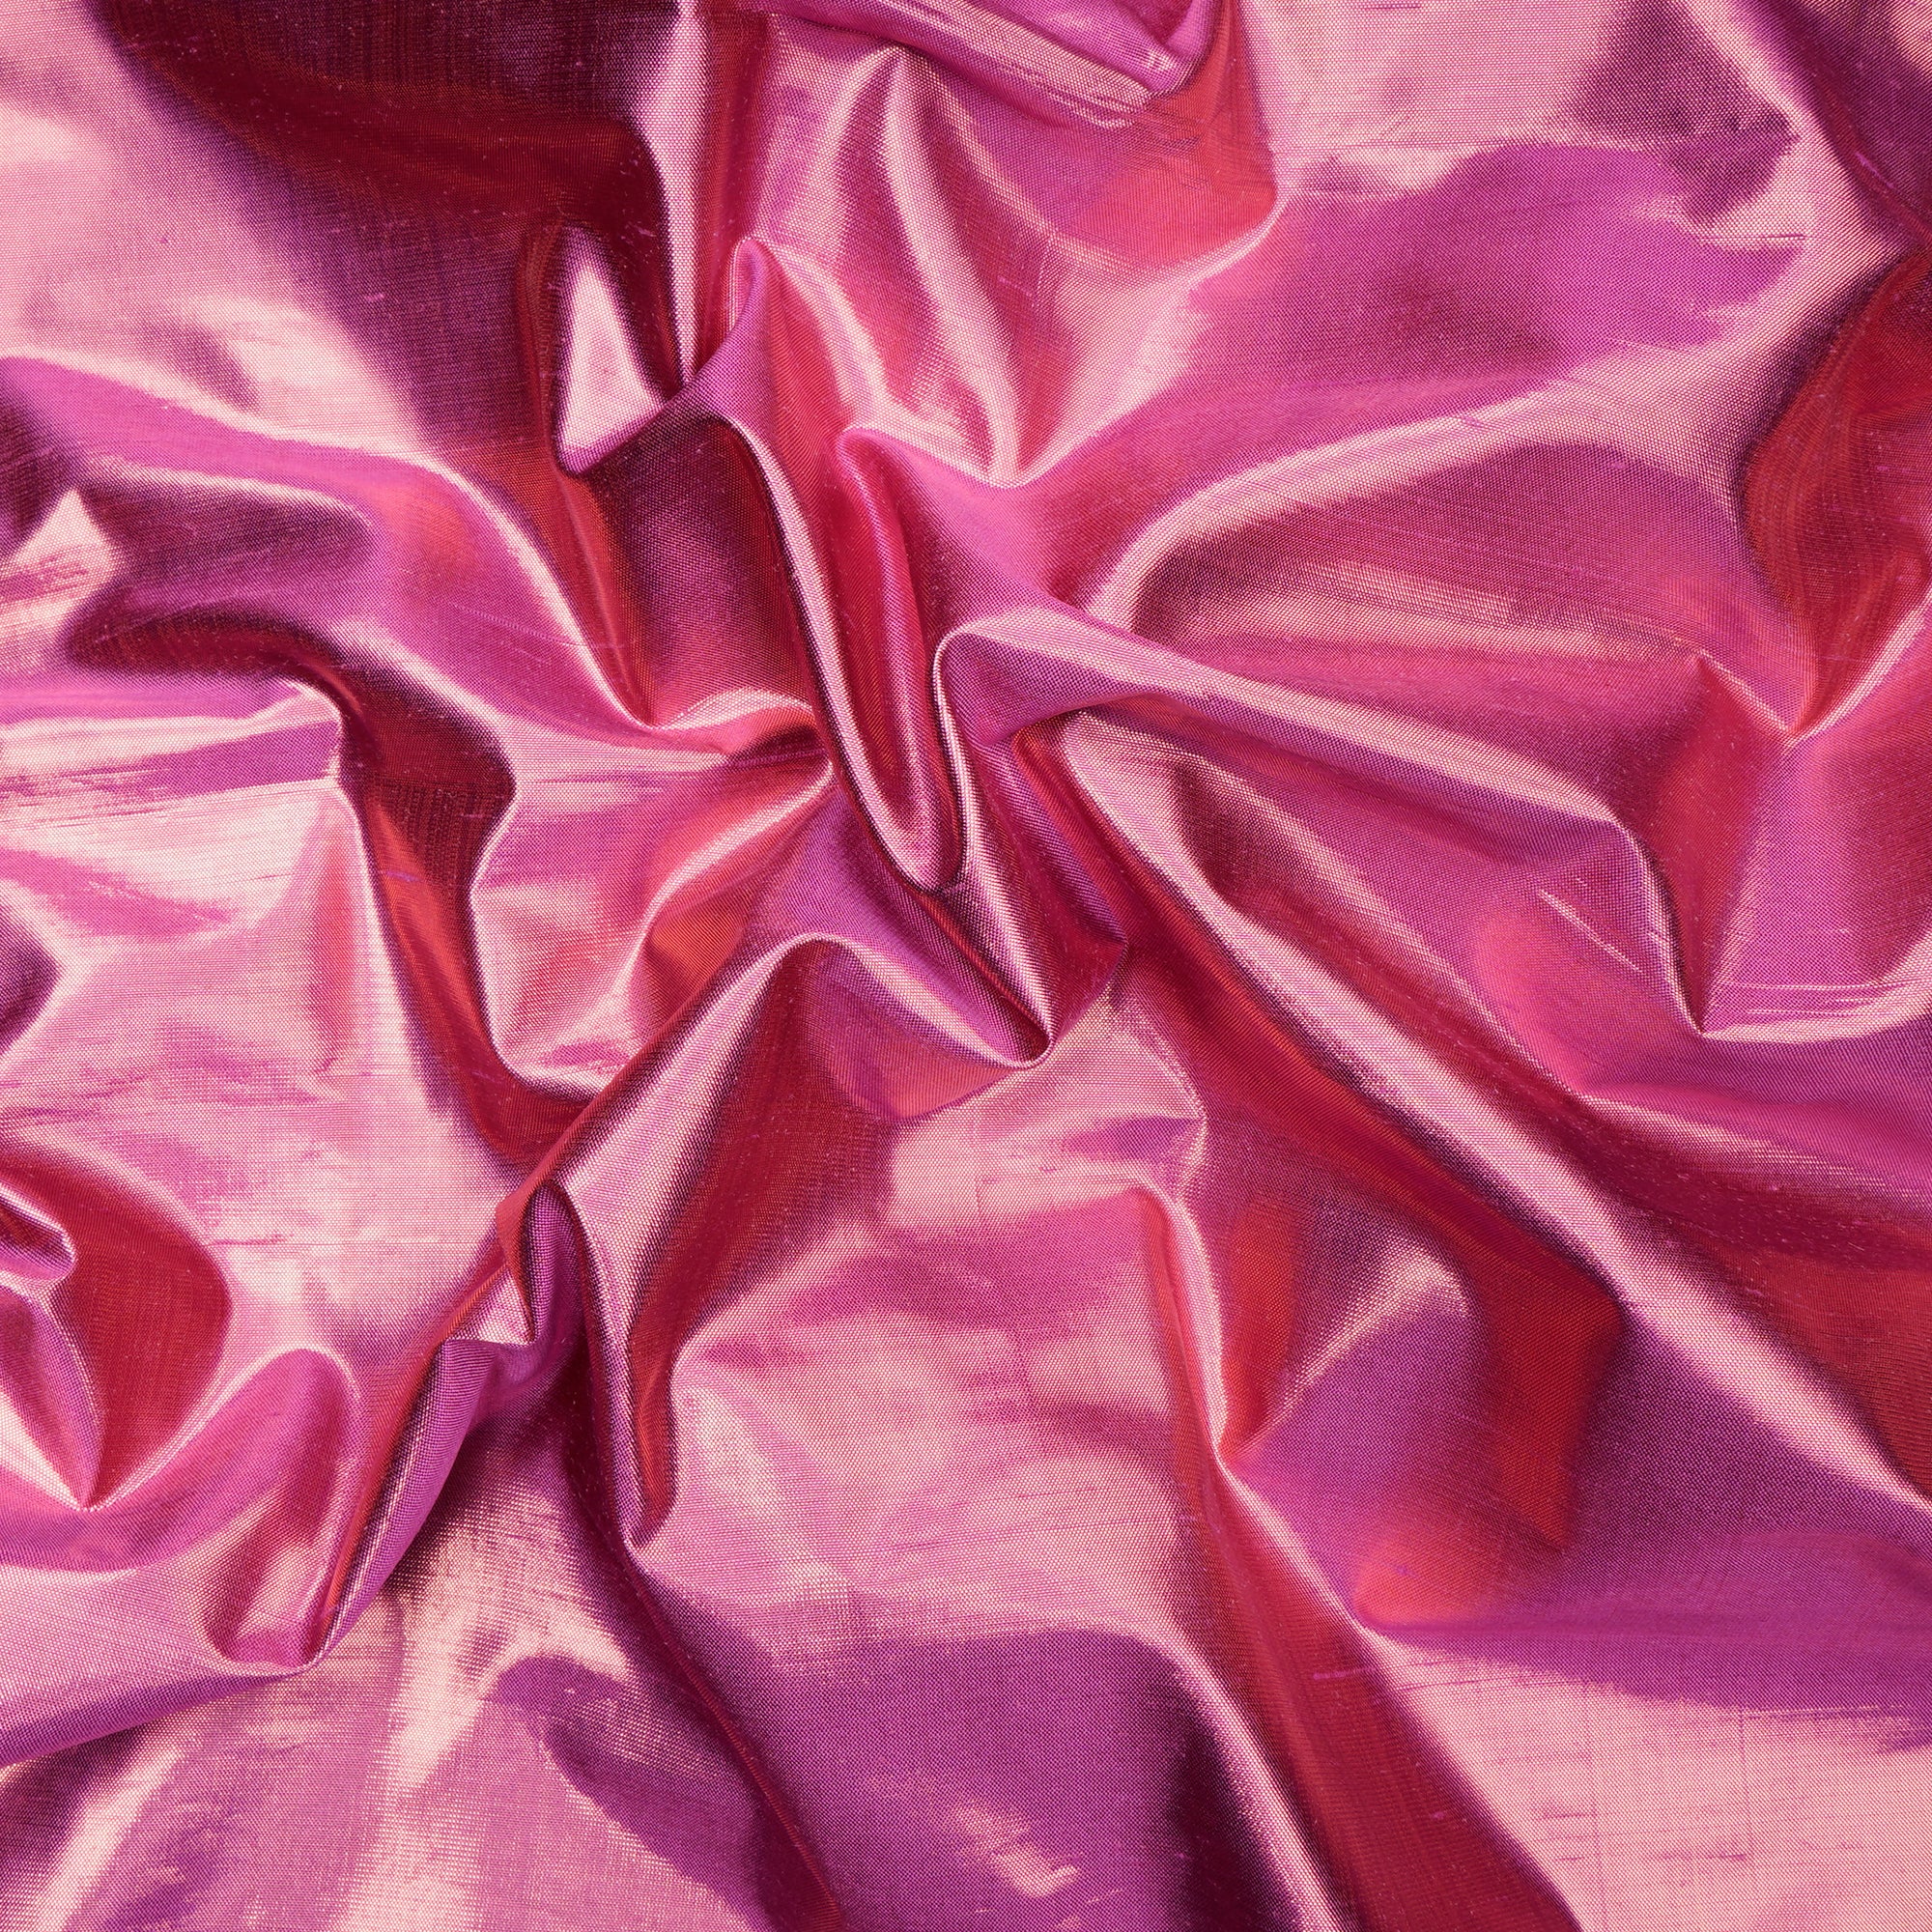 Metallic Pink Color Metallic Dupion Silk Fabric